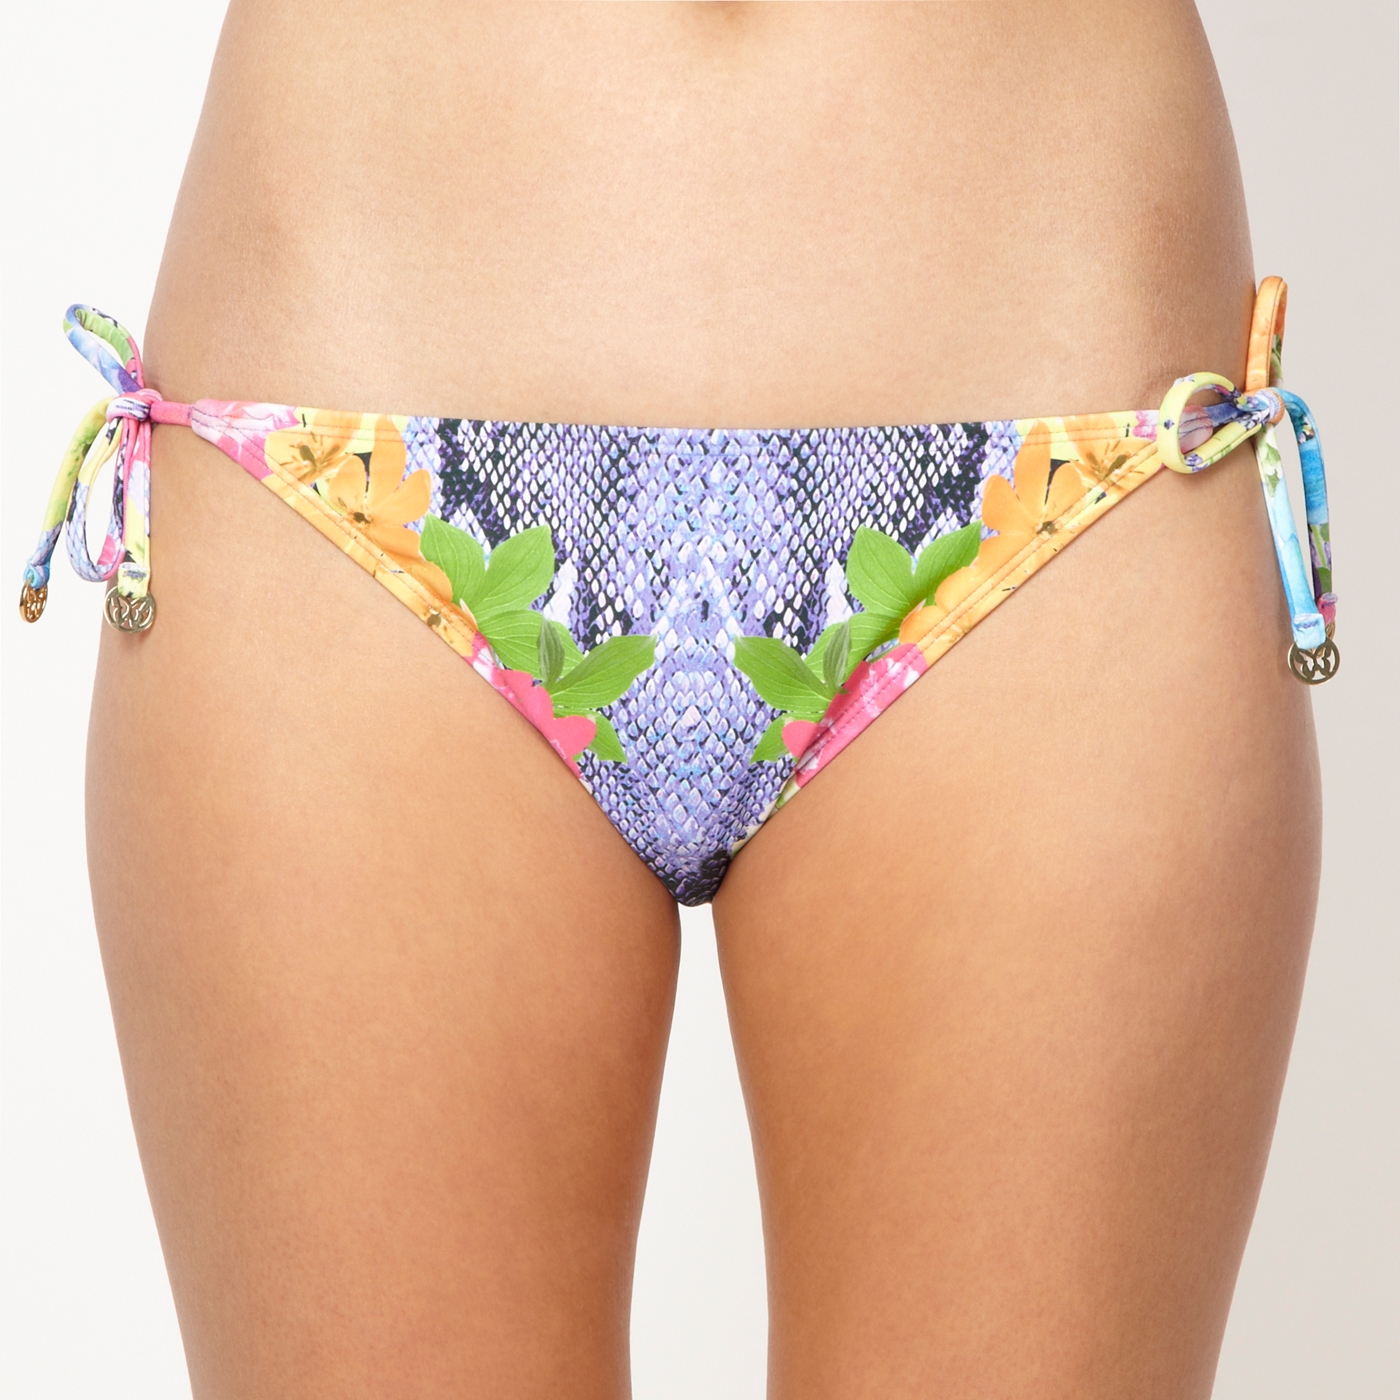 Butterfly by Matthew Williamson Designer purple floral snake printed tie side bikini bottoms